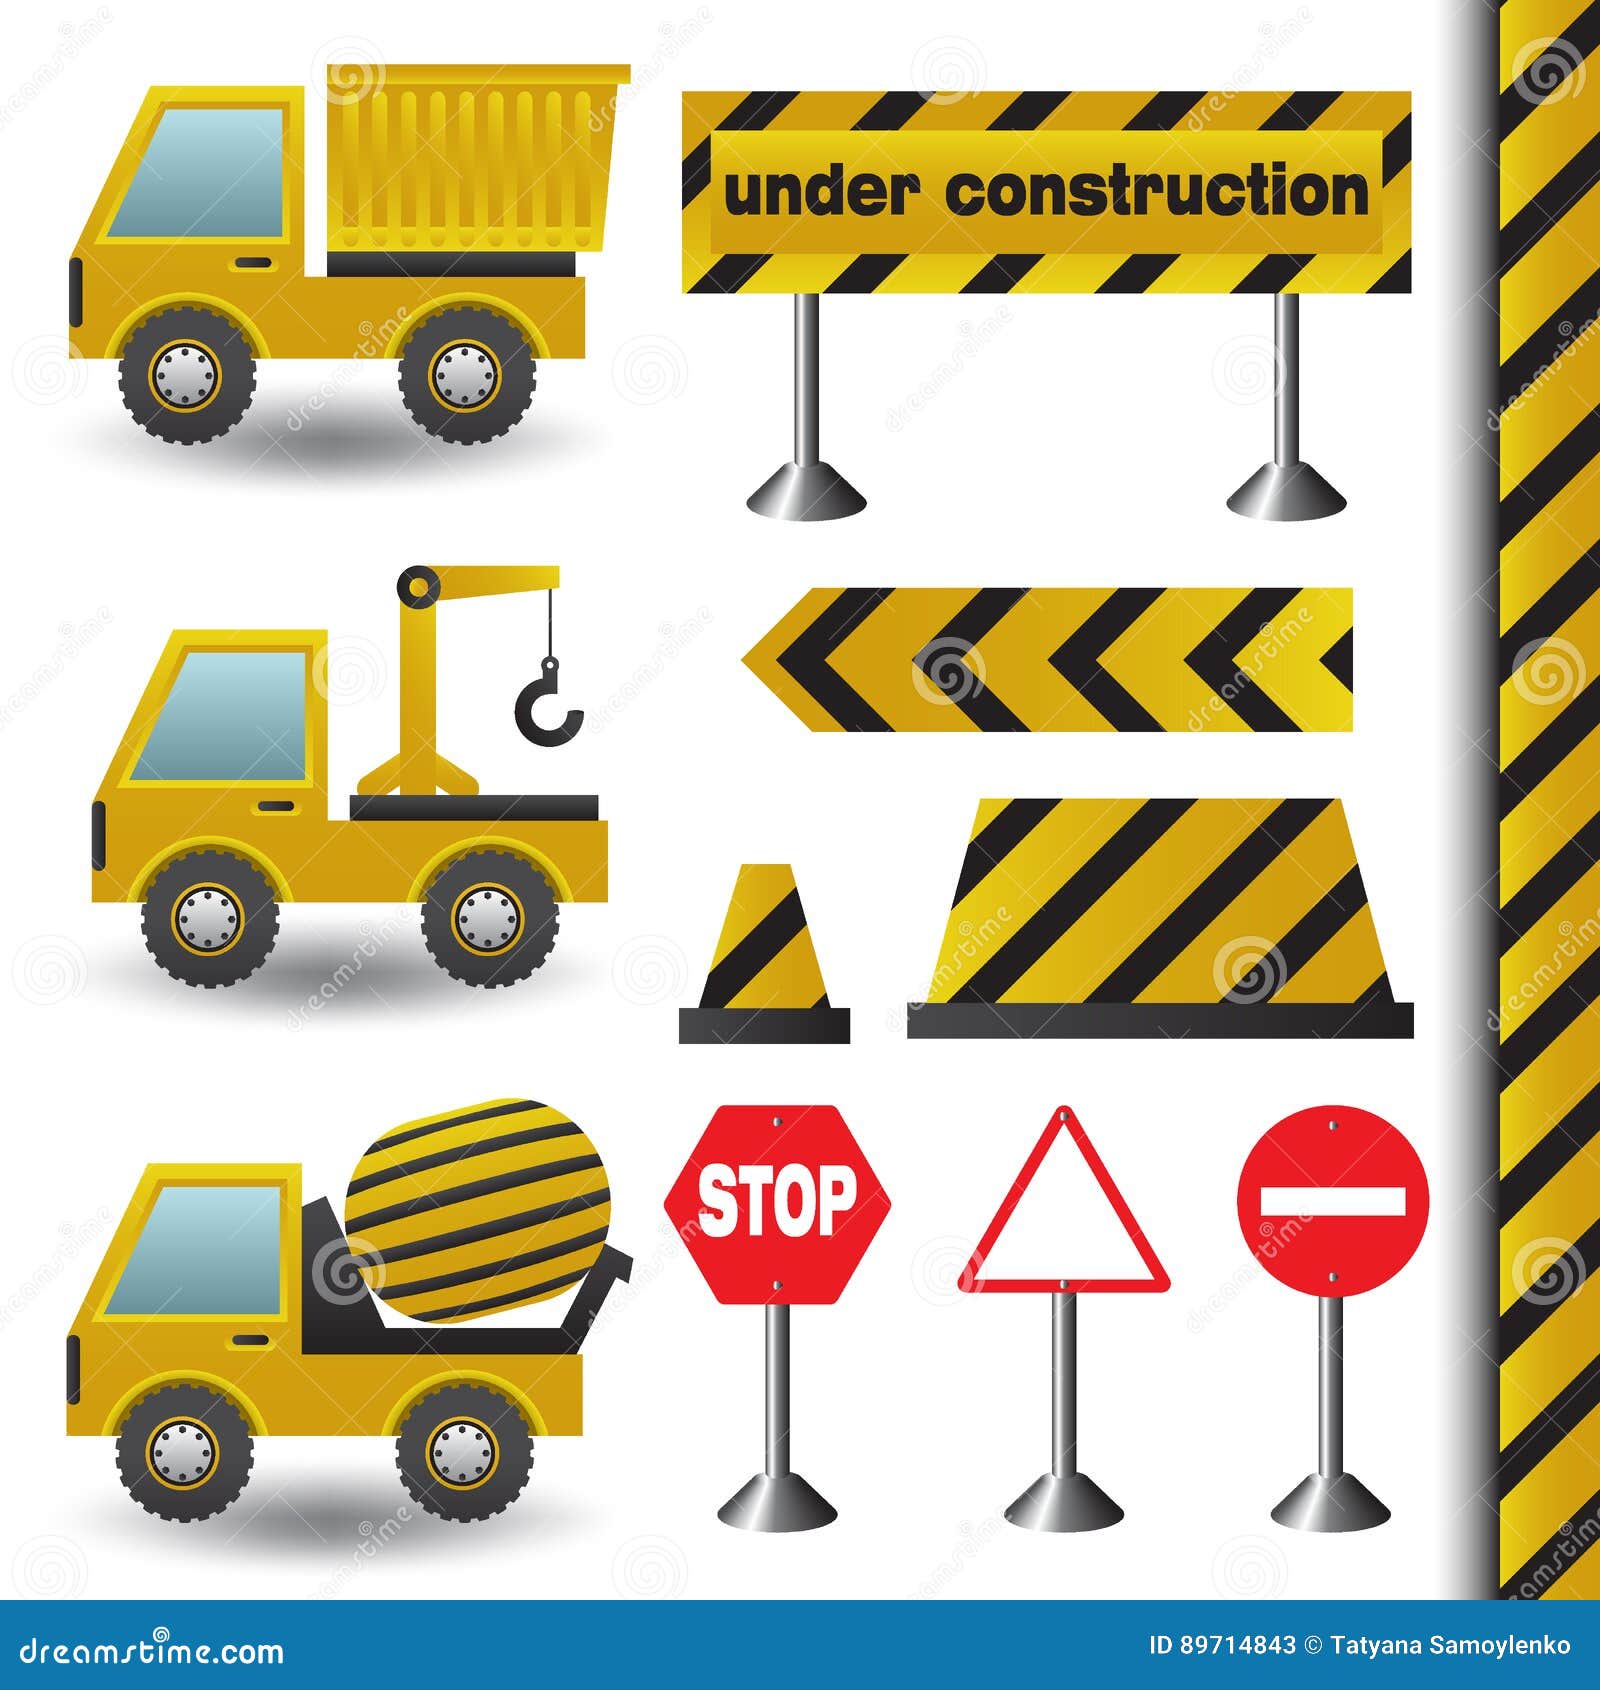 Construction Vehicles stock vector. Illustration of engineering - 89714843